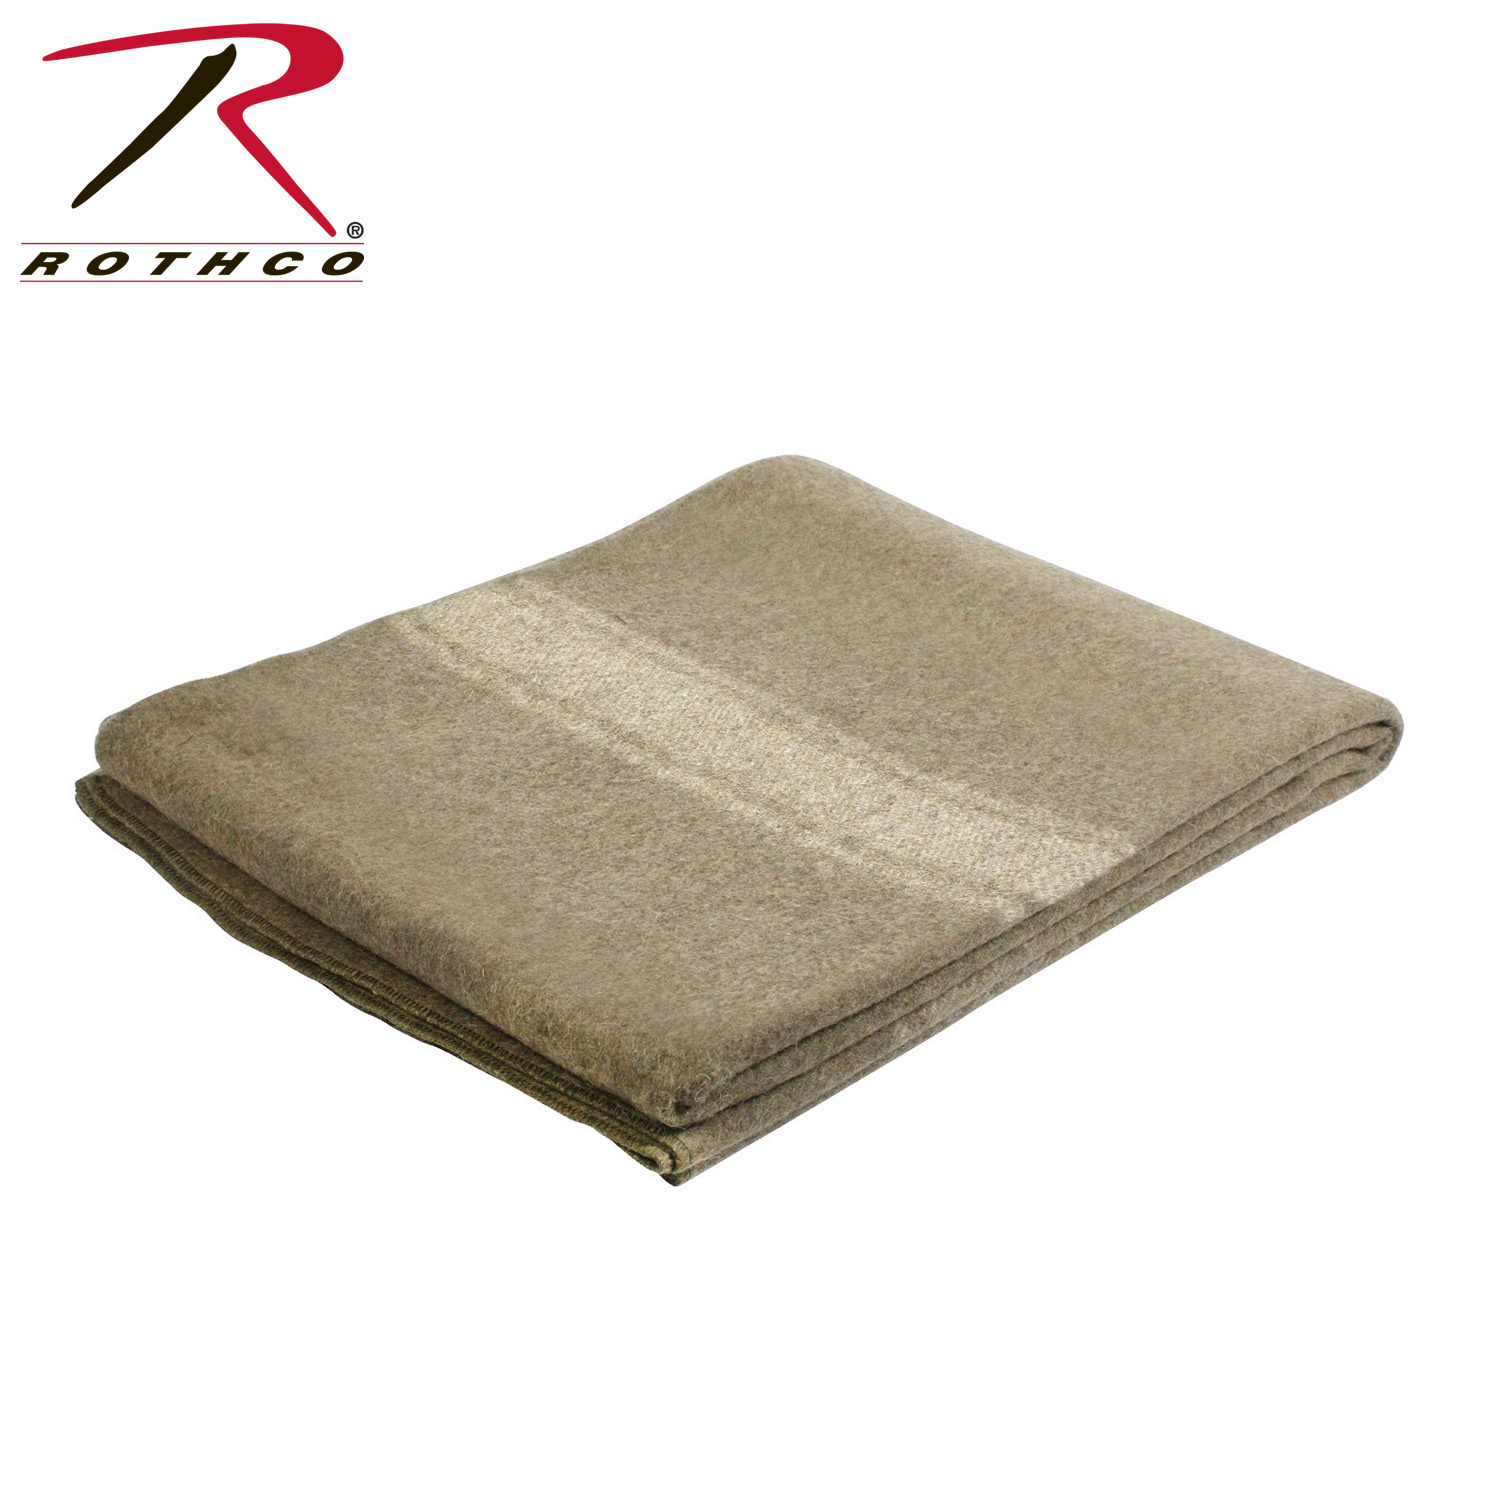 Rothco 10244 European Surplus Style Blanket Brown EBay